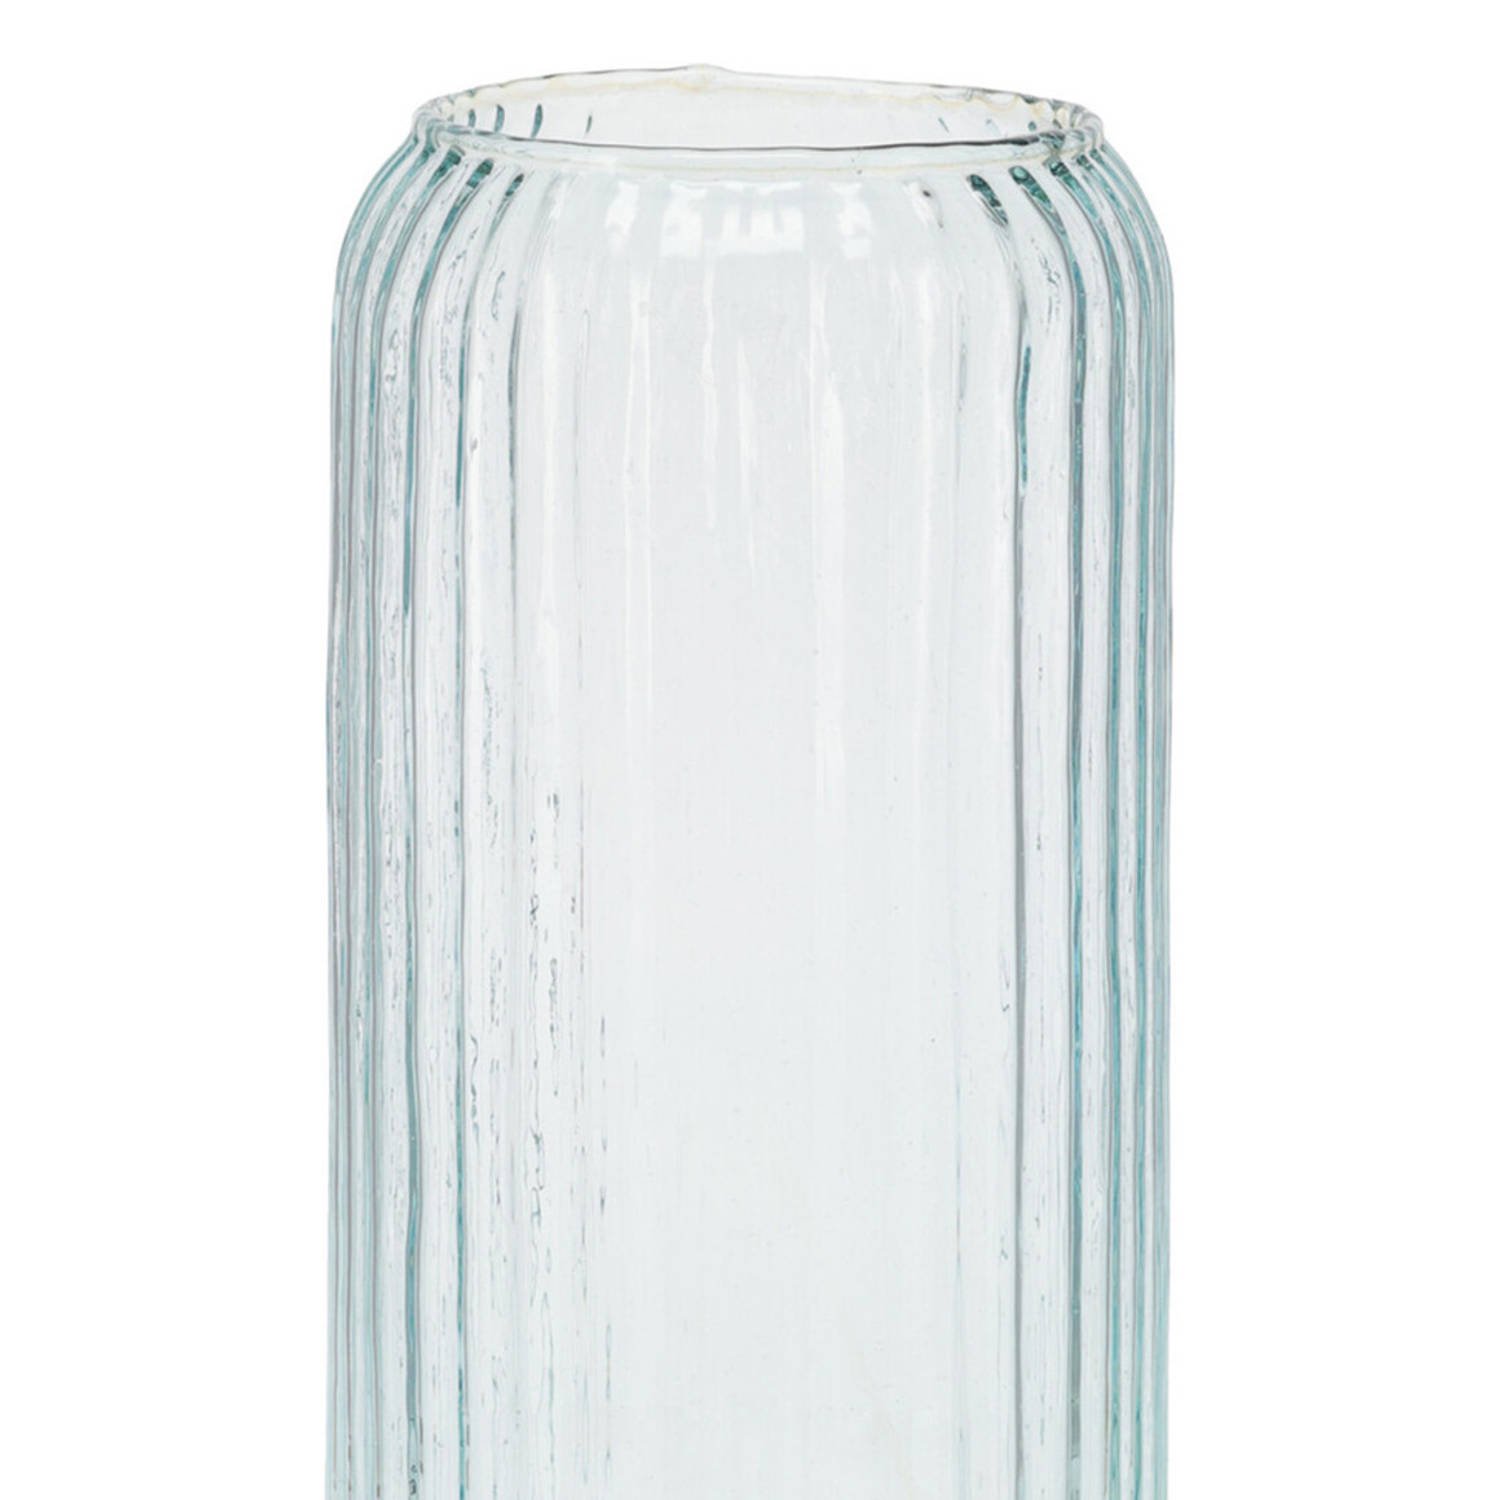 Stiklinė vaza CYLINDER, iš perdirbto stiklo, 14,5 x 37 cm - 2